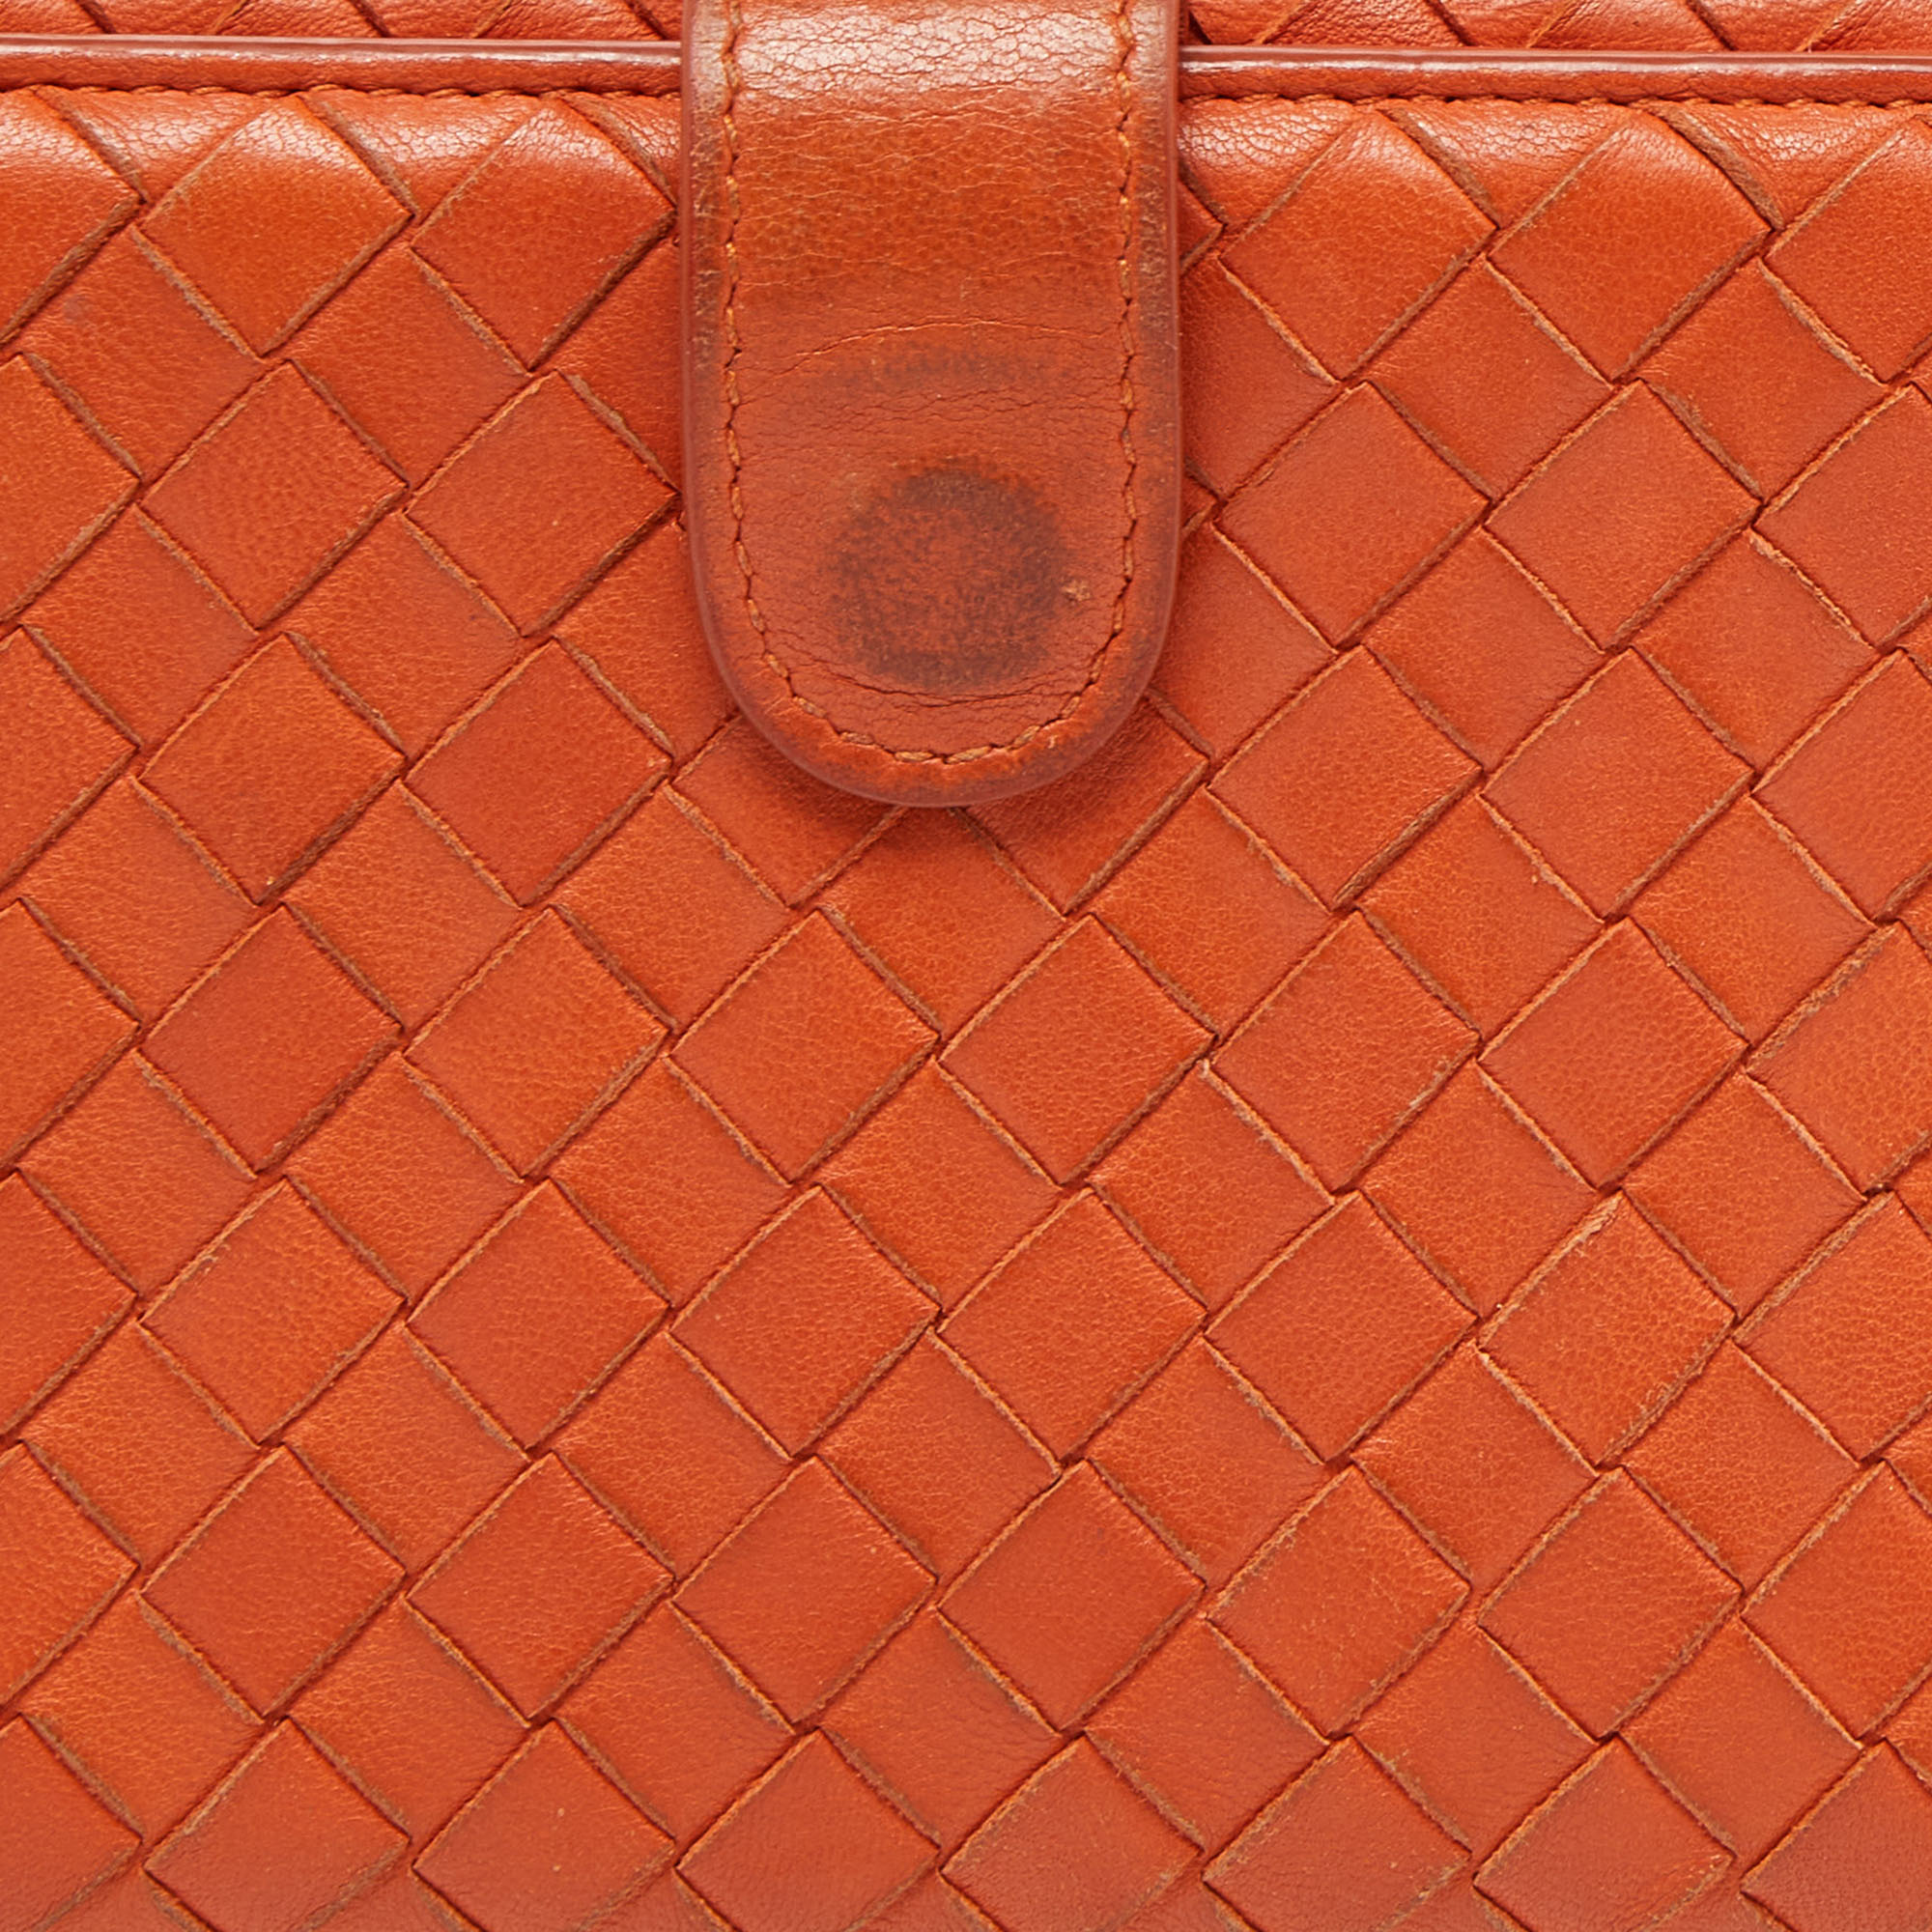 Bottega Veneta Orange Intrecciato Leather Flap Continental Wallet